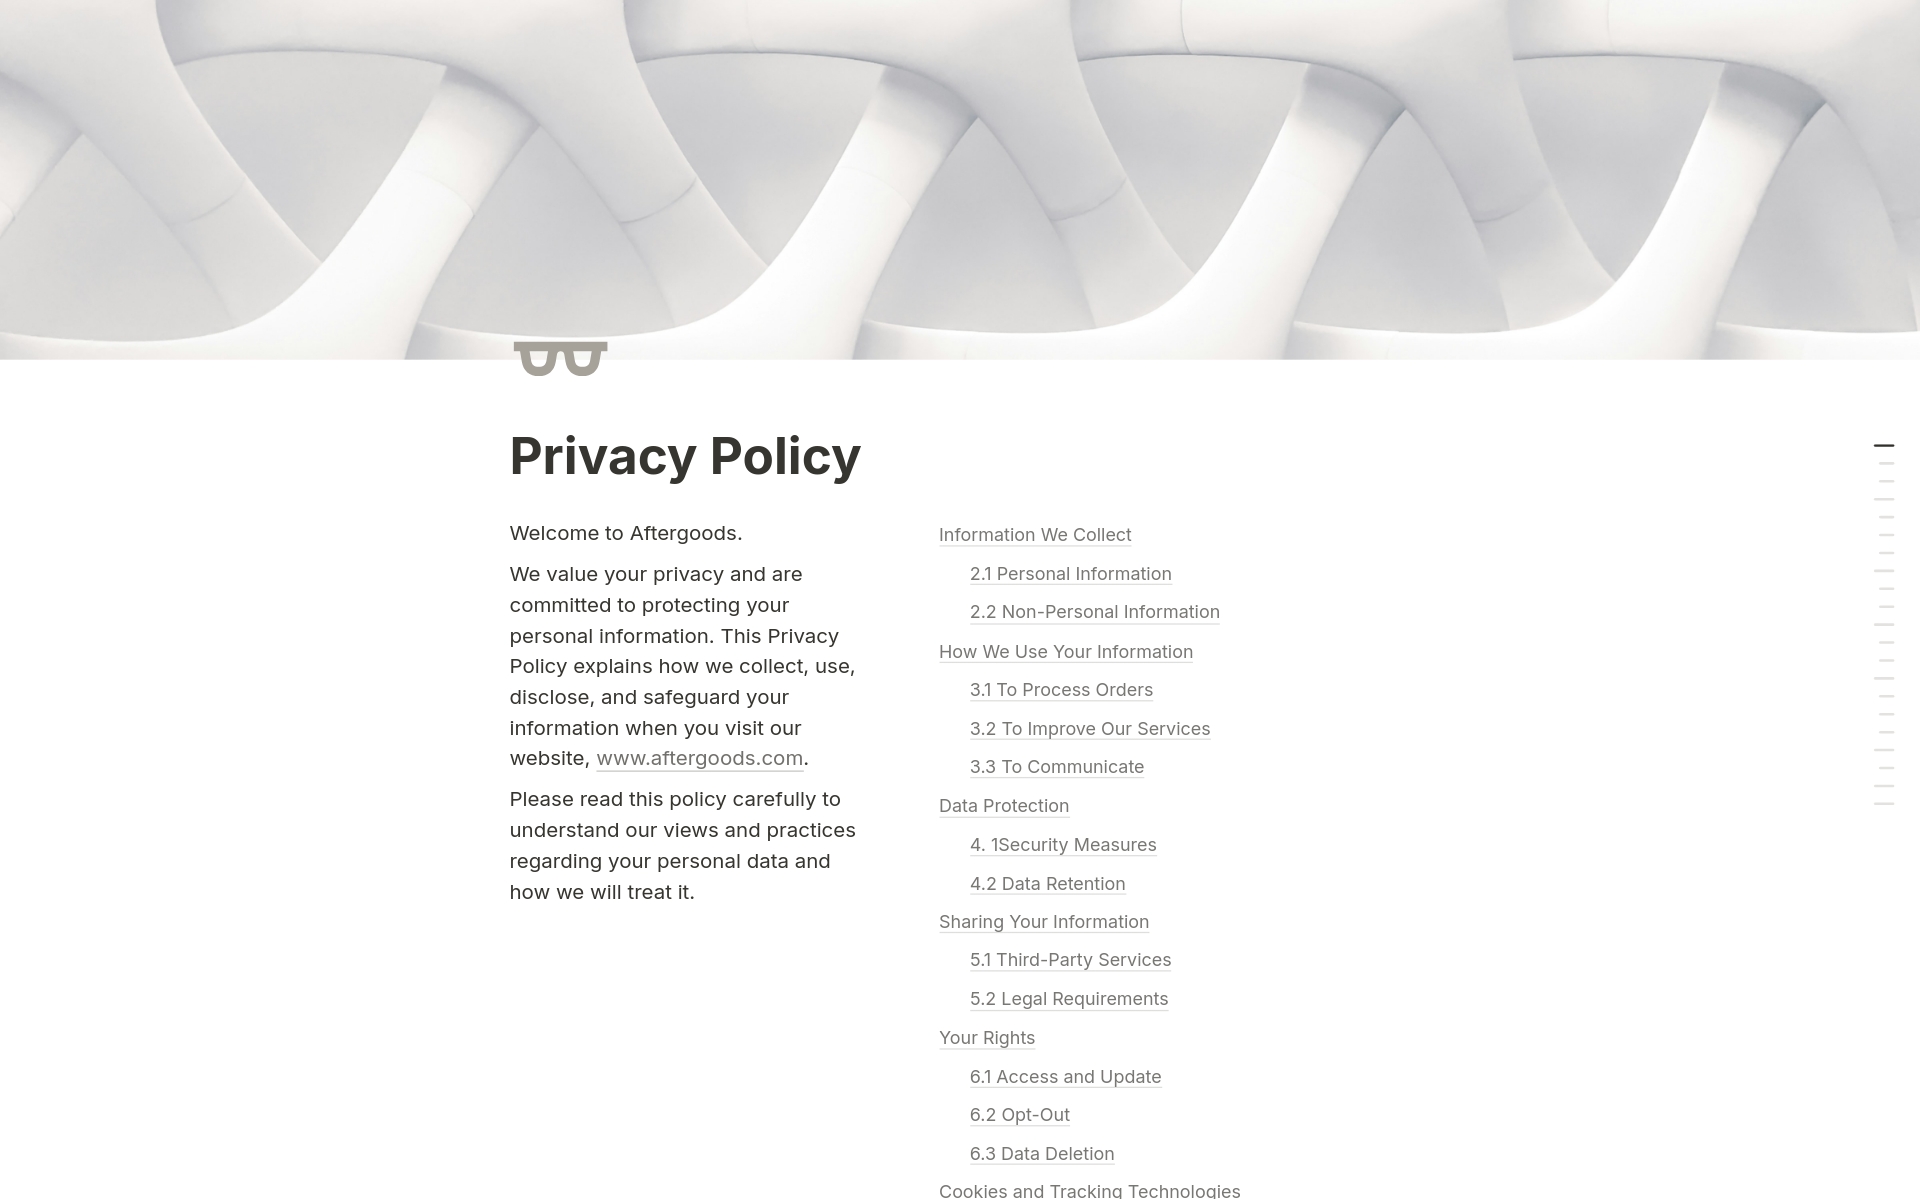 Aperçu du modèle de Privacy Policy